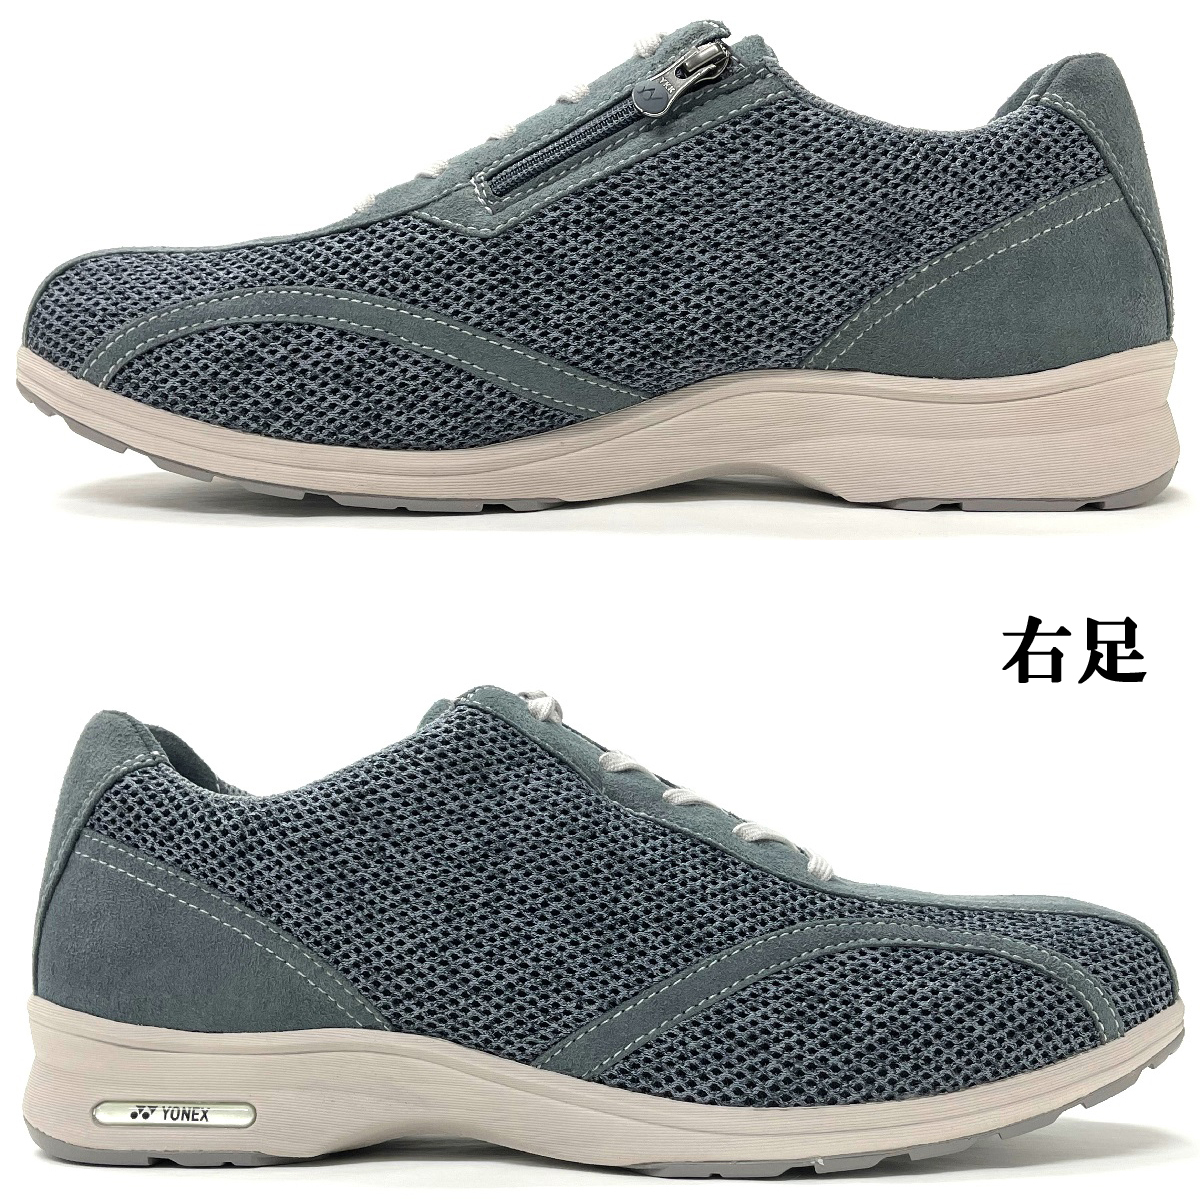  translation have!!M30AW gray 26.0cm Yonex YONEX power cushion walking shoes men's shoes wide width wide 4.5E fastener 030204